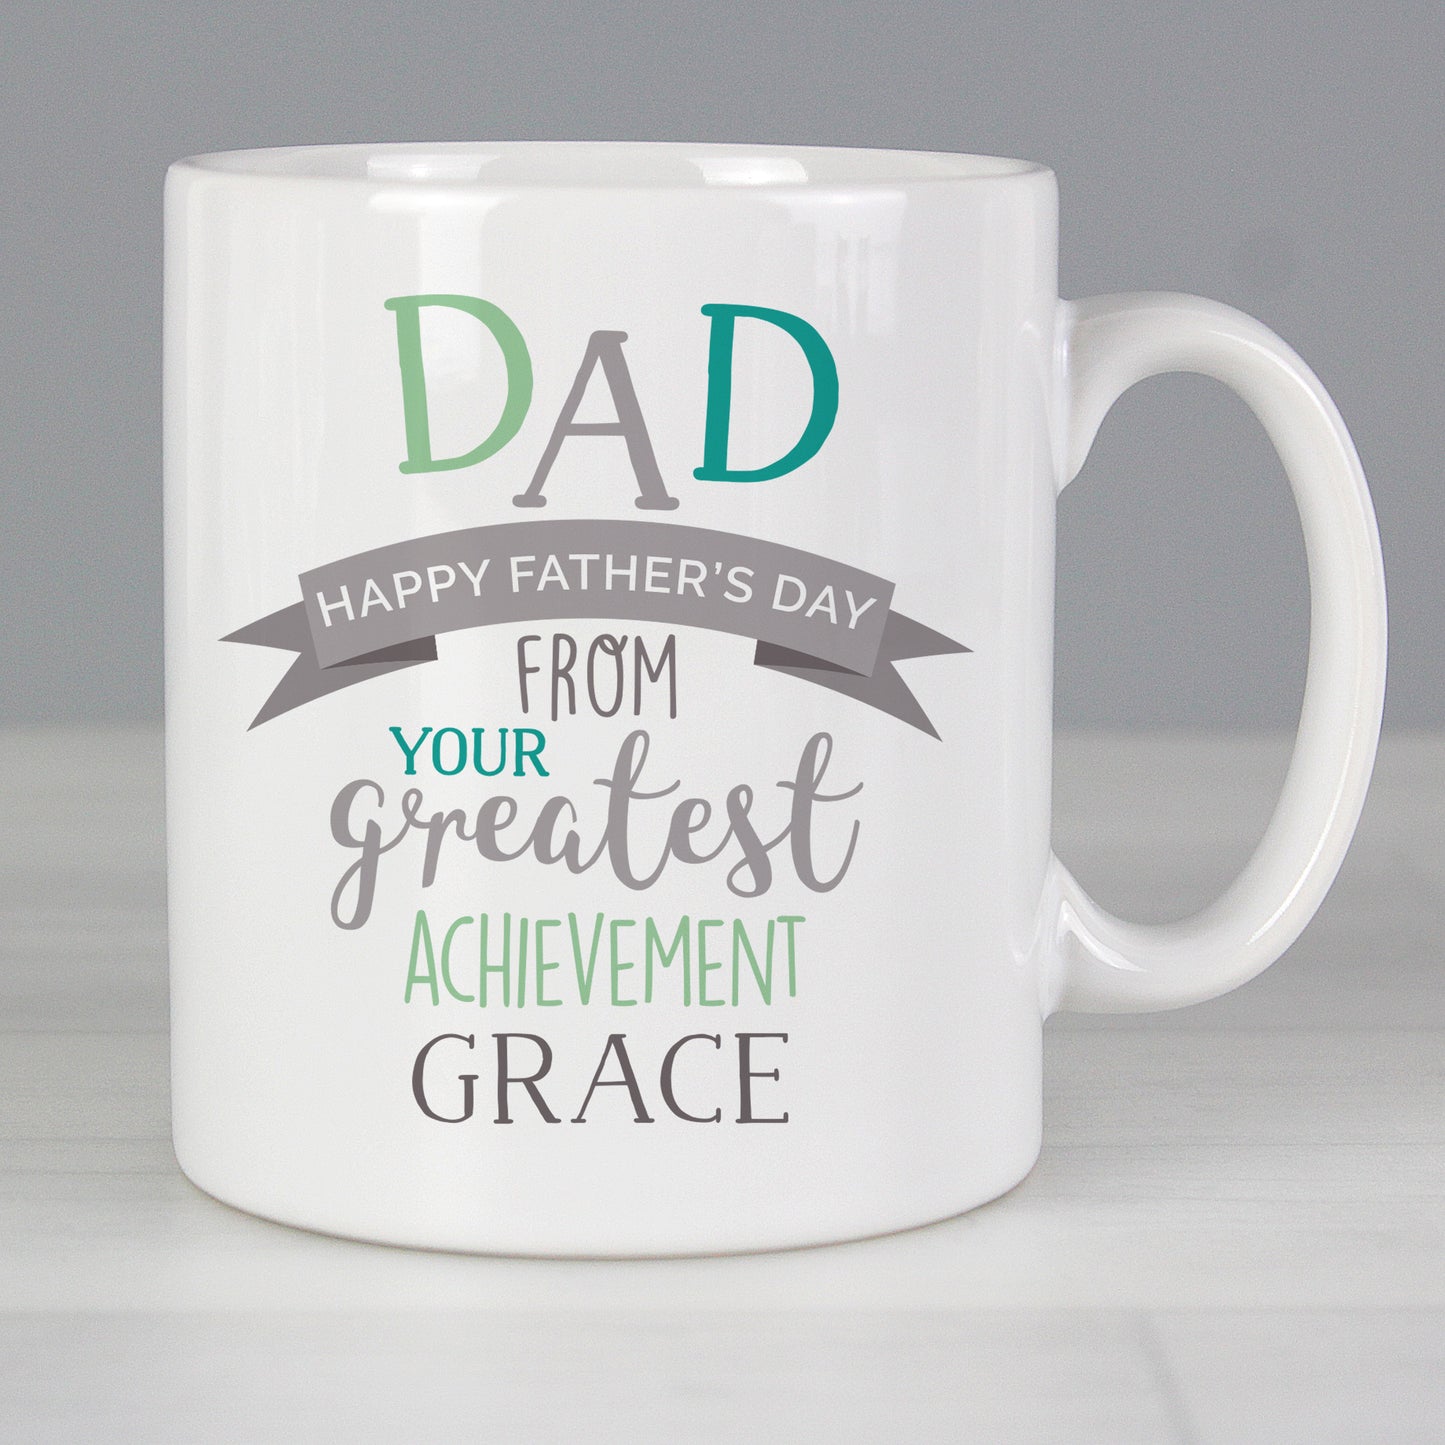 Personalised 'Dad's Greatest Achievement' Mug - Personalise It!